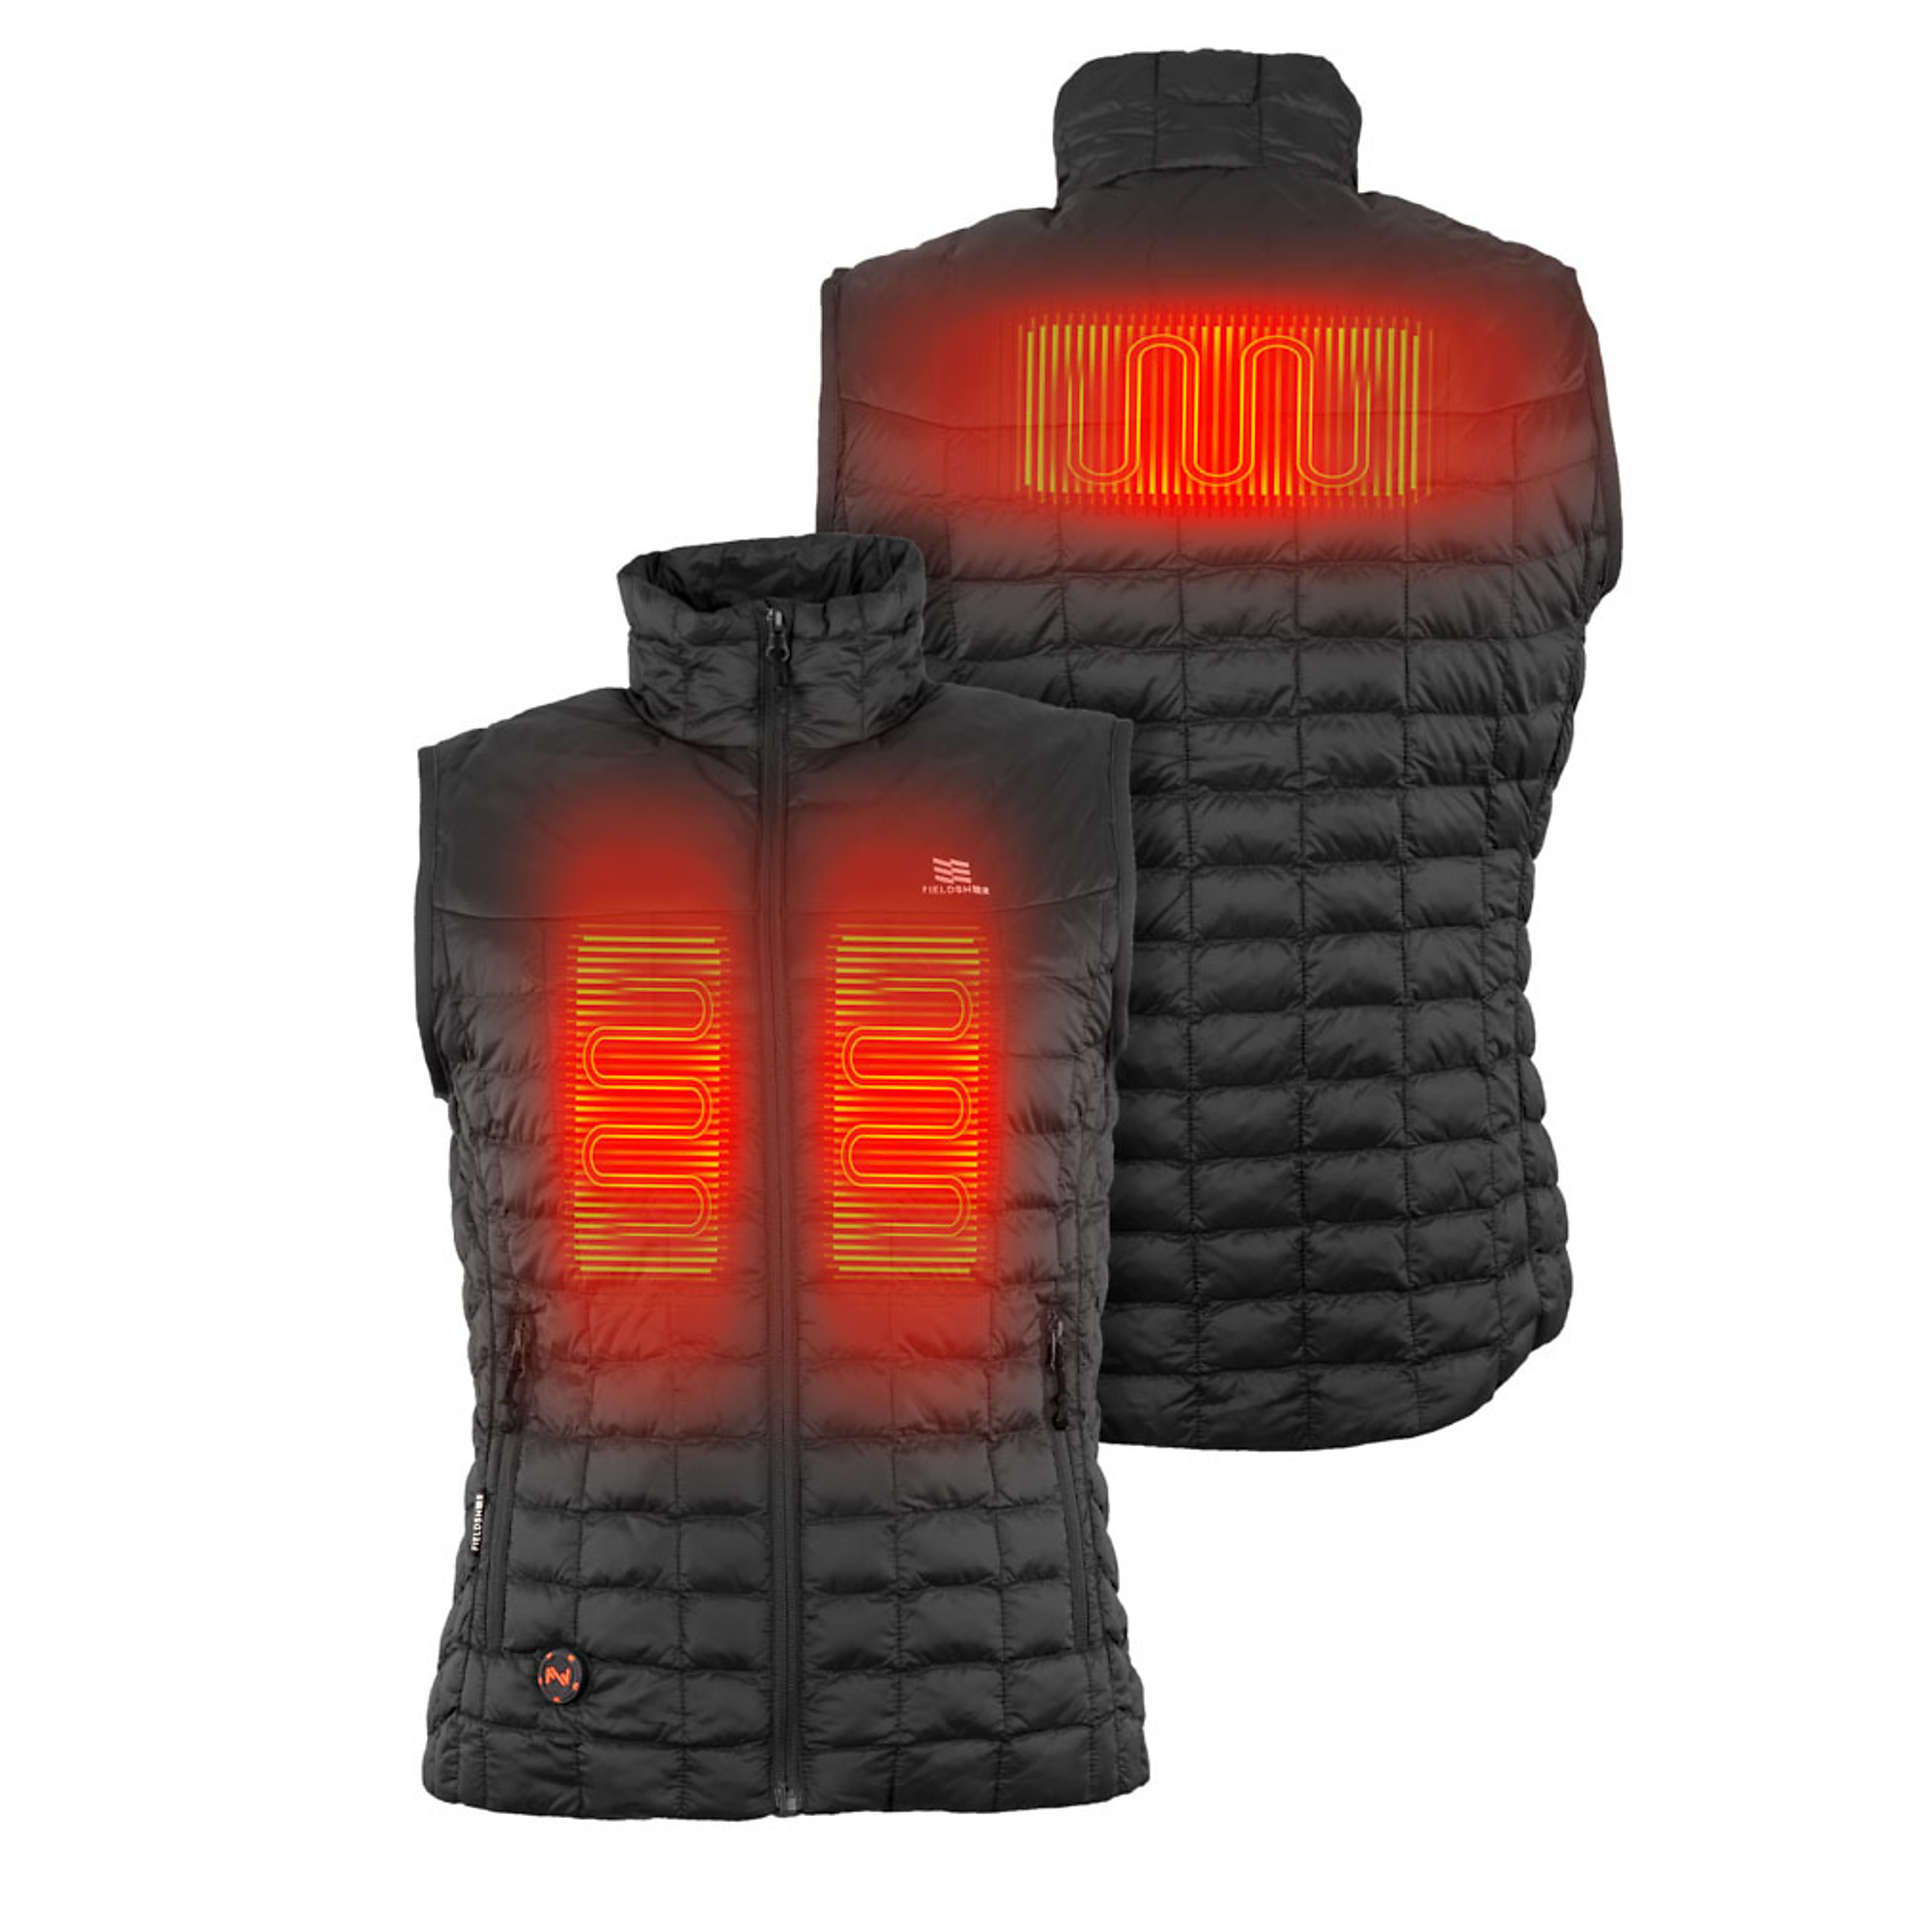 Fieldsheer, Women's 7.4v Backcountry Heated Vest, Size L, Color Black, Model MWWV04010420